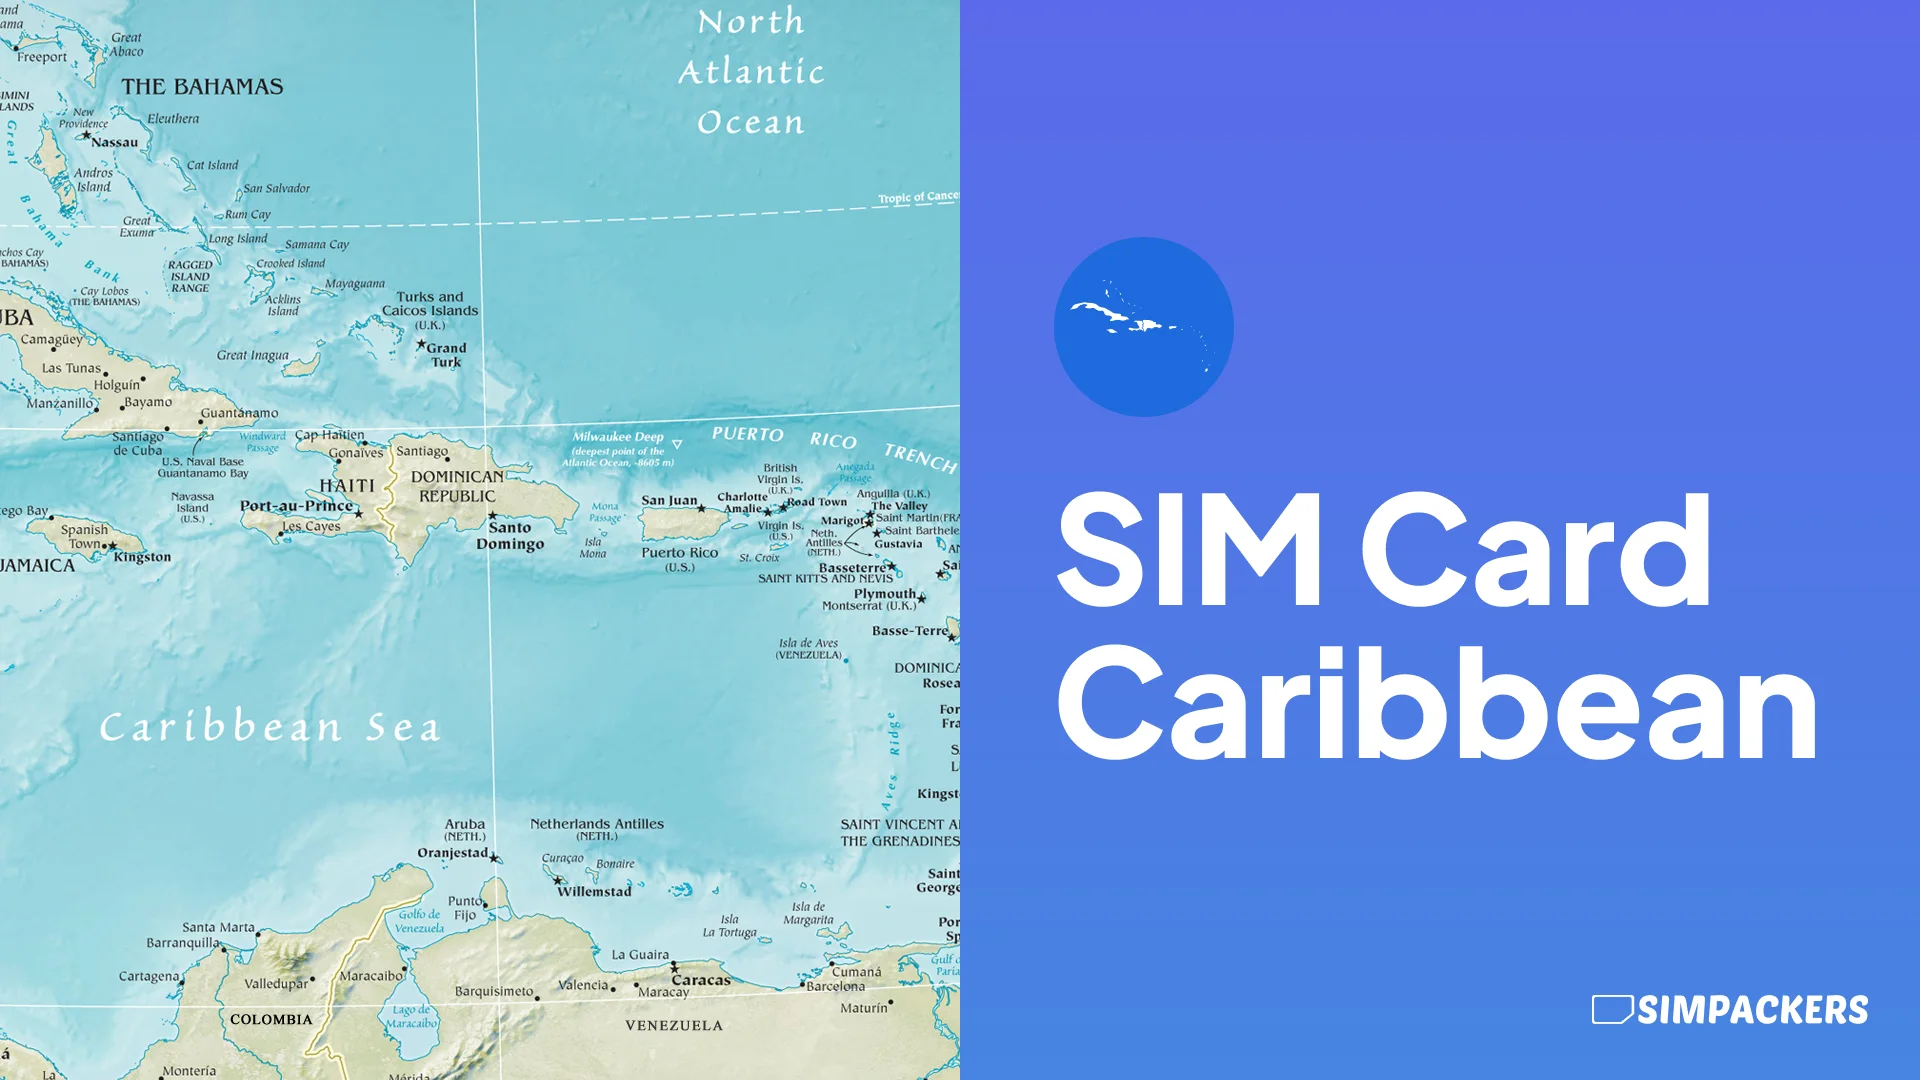 EN/FEATURED_IMAGES/sim-card-caribbean.webp